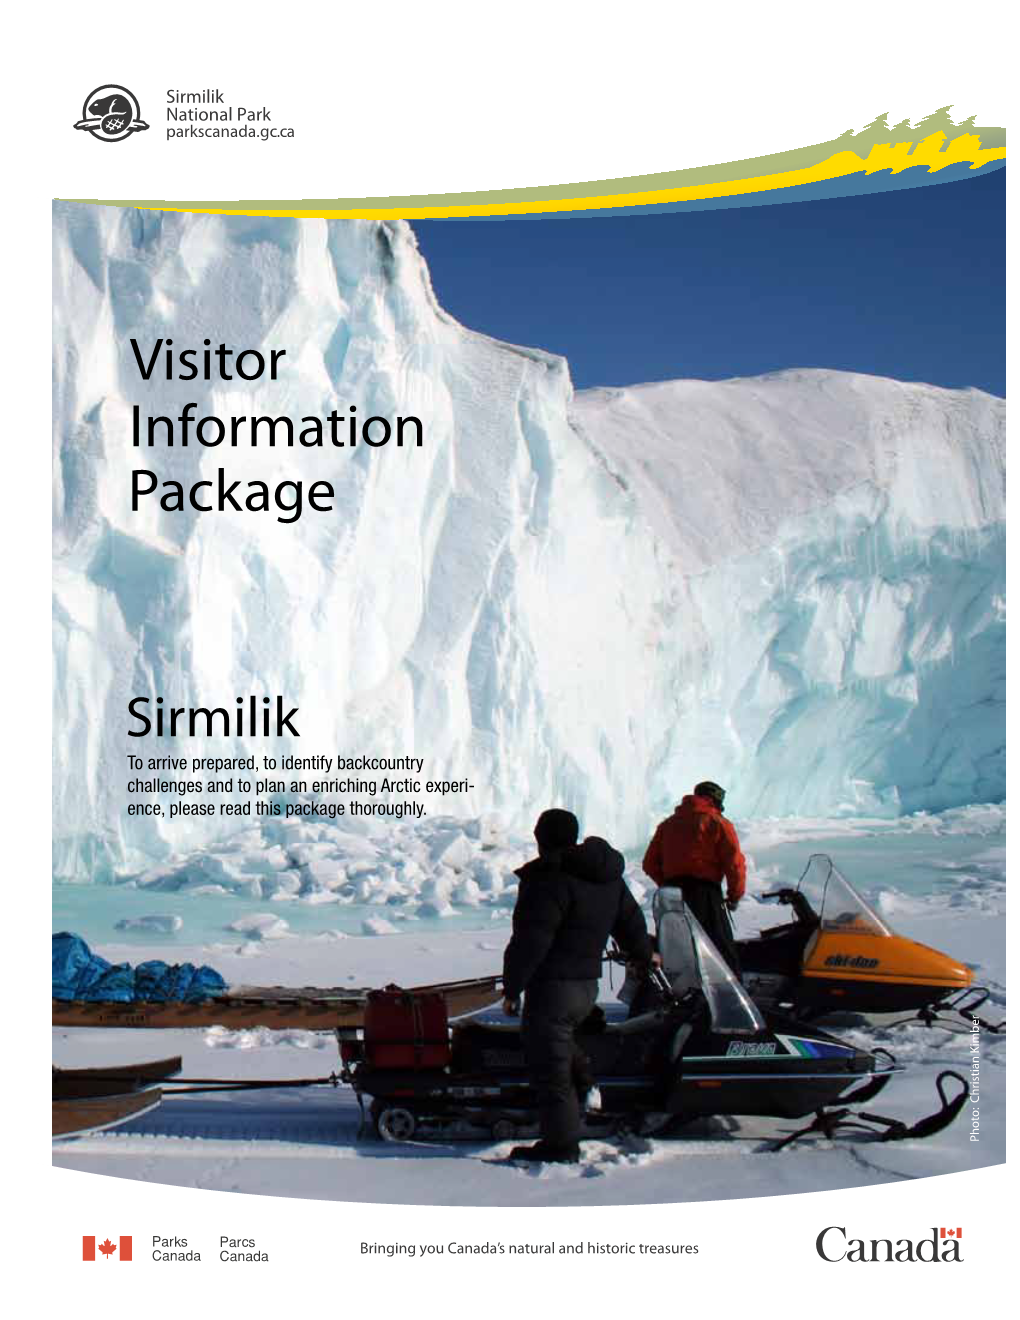 2013 Visitor Information Package for Sirmilik National Park